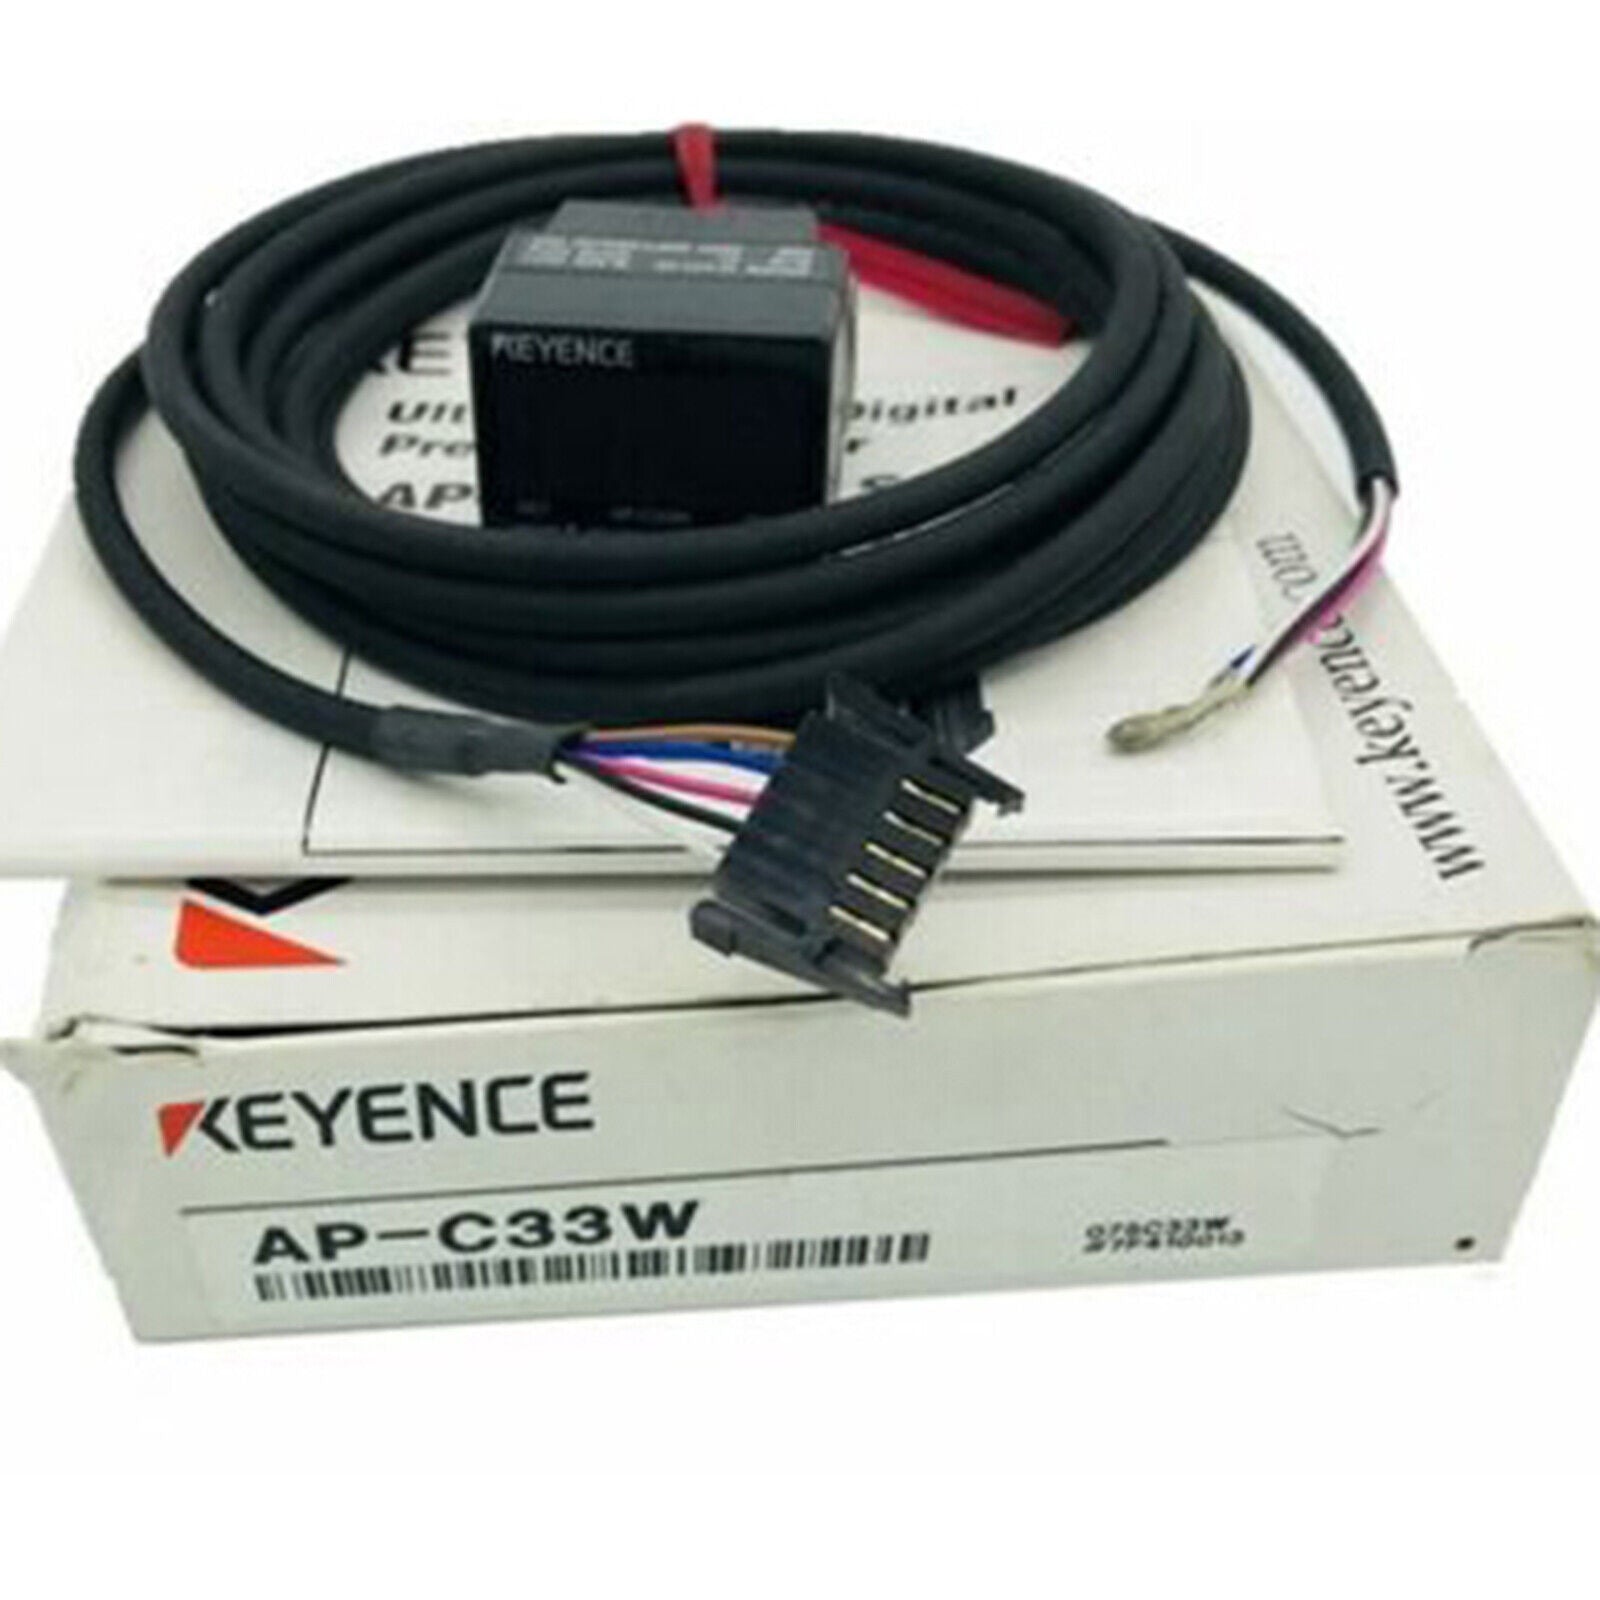 new ONE  KEYENCE Photoelectric Sensors AP-C33W Fast